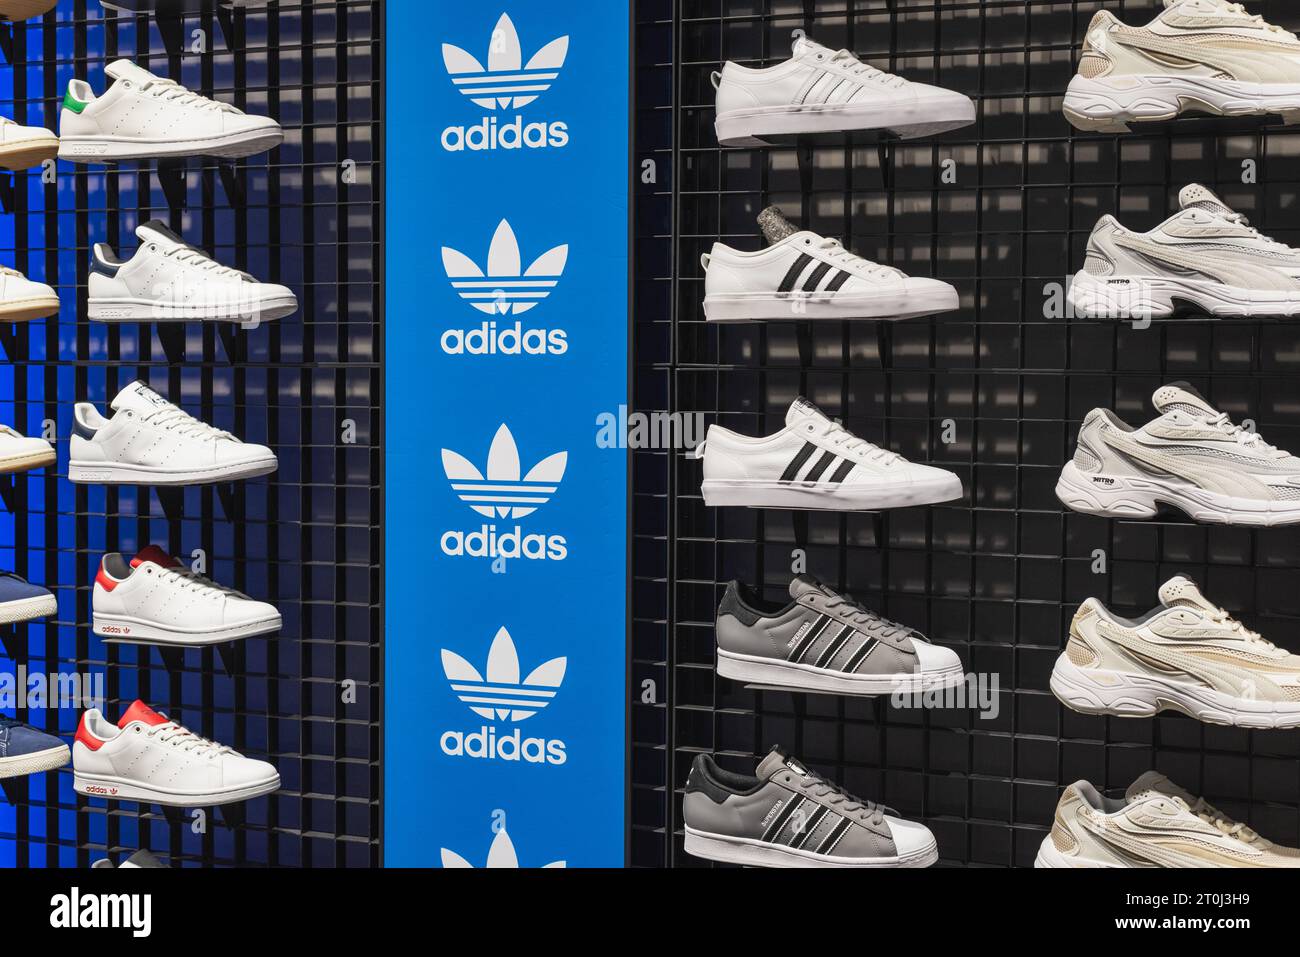 Bangkok, Thailand - 17. September 2023: Ein Stand mit Adidas- und Puma Nitro-Sneakers, verziert mit Adidas-Logos. Stockfoto